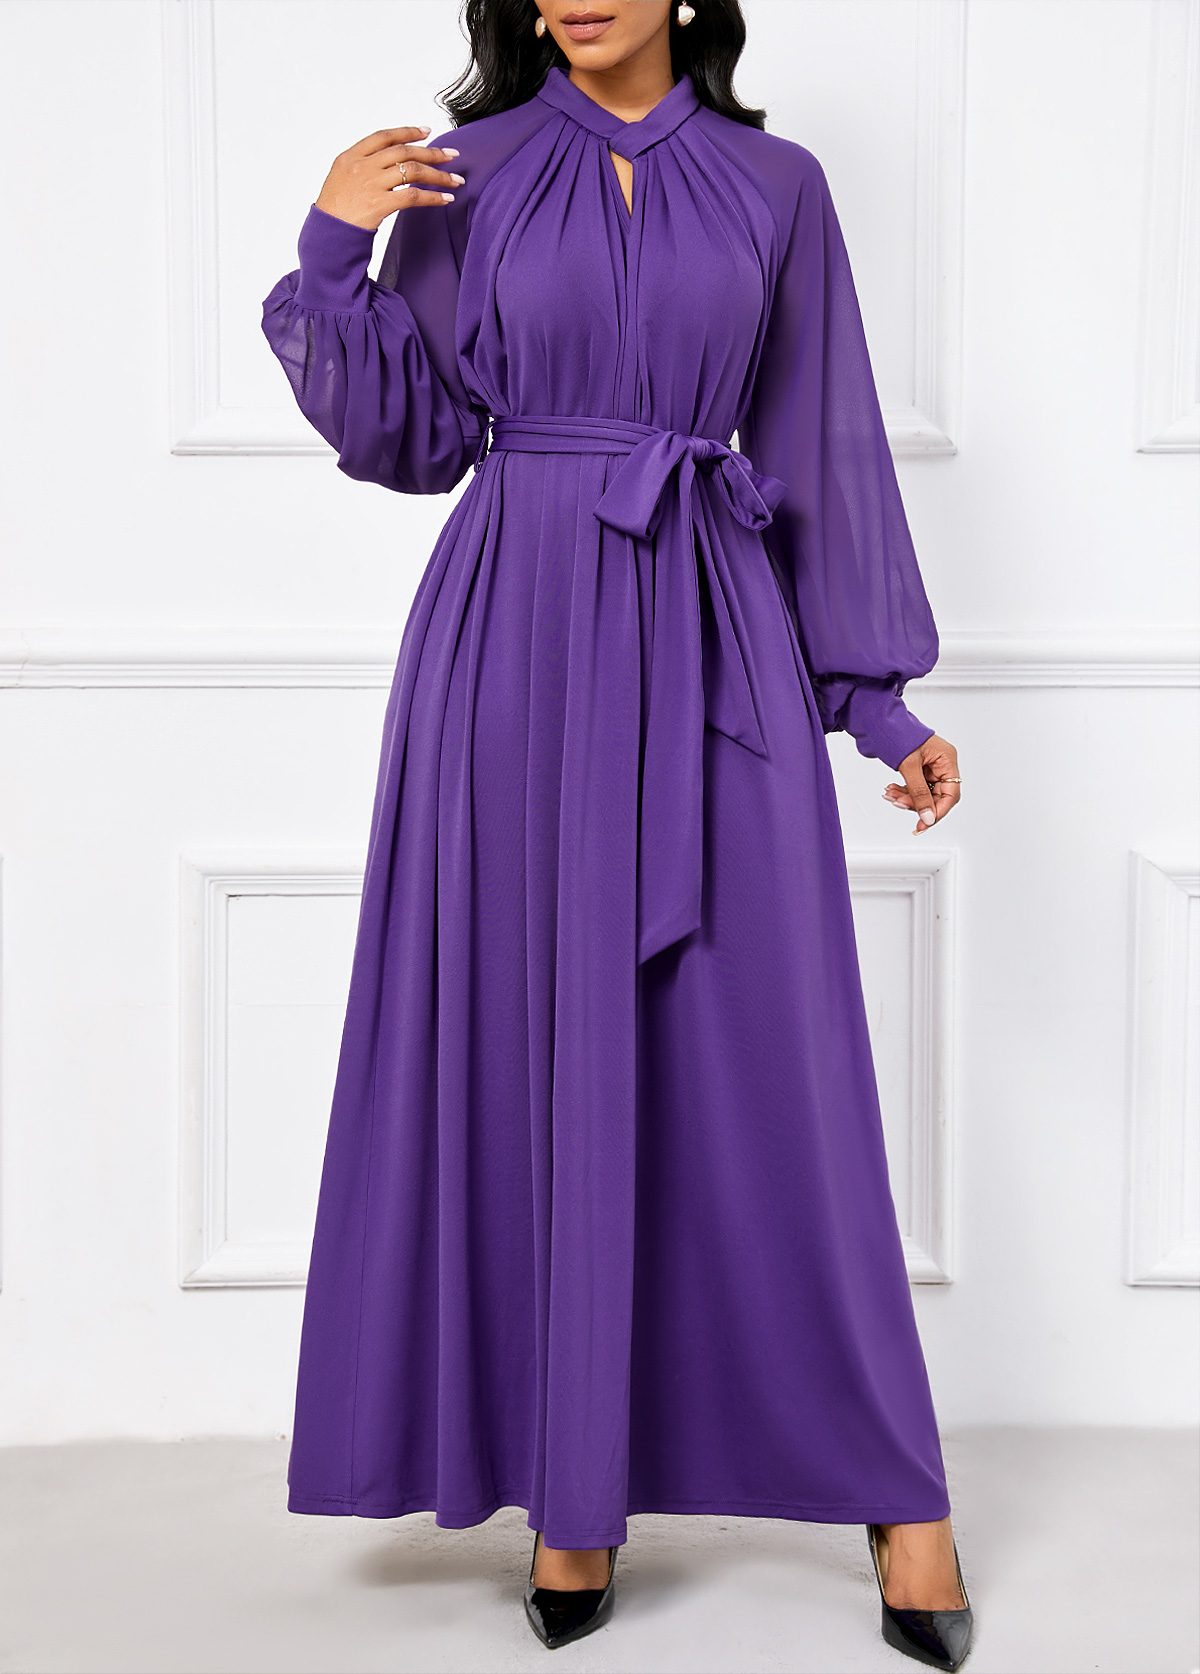 Criss Cross Belted Purple Long Sleeve Maxi Dress